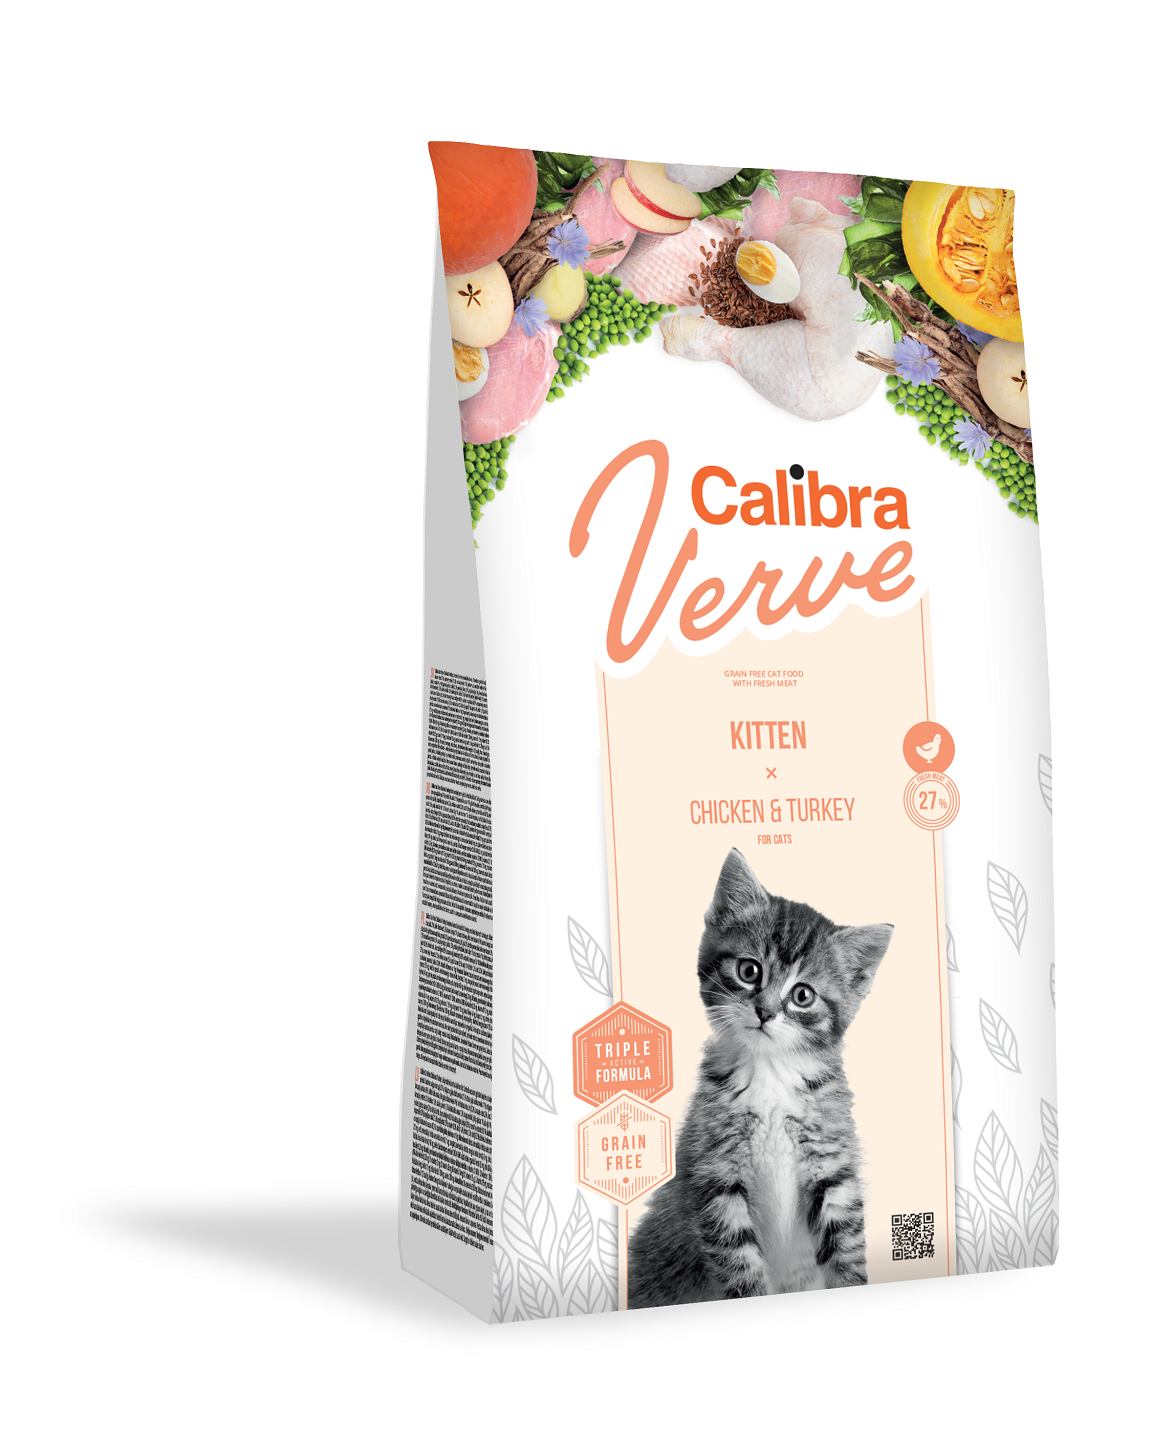 Calibra Cat Verve Grain Free Kitten, Chicken & Turkey, 750 g petmart